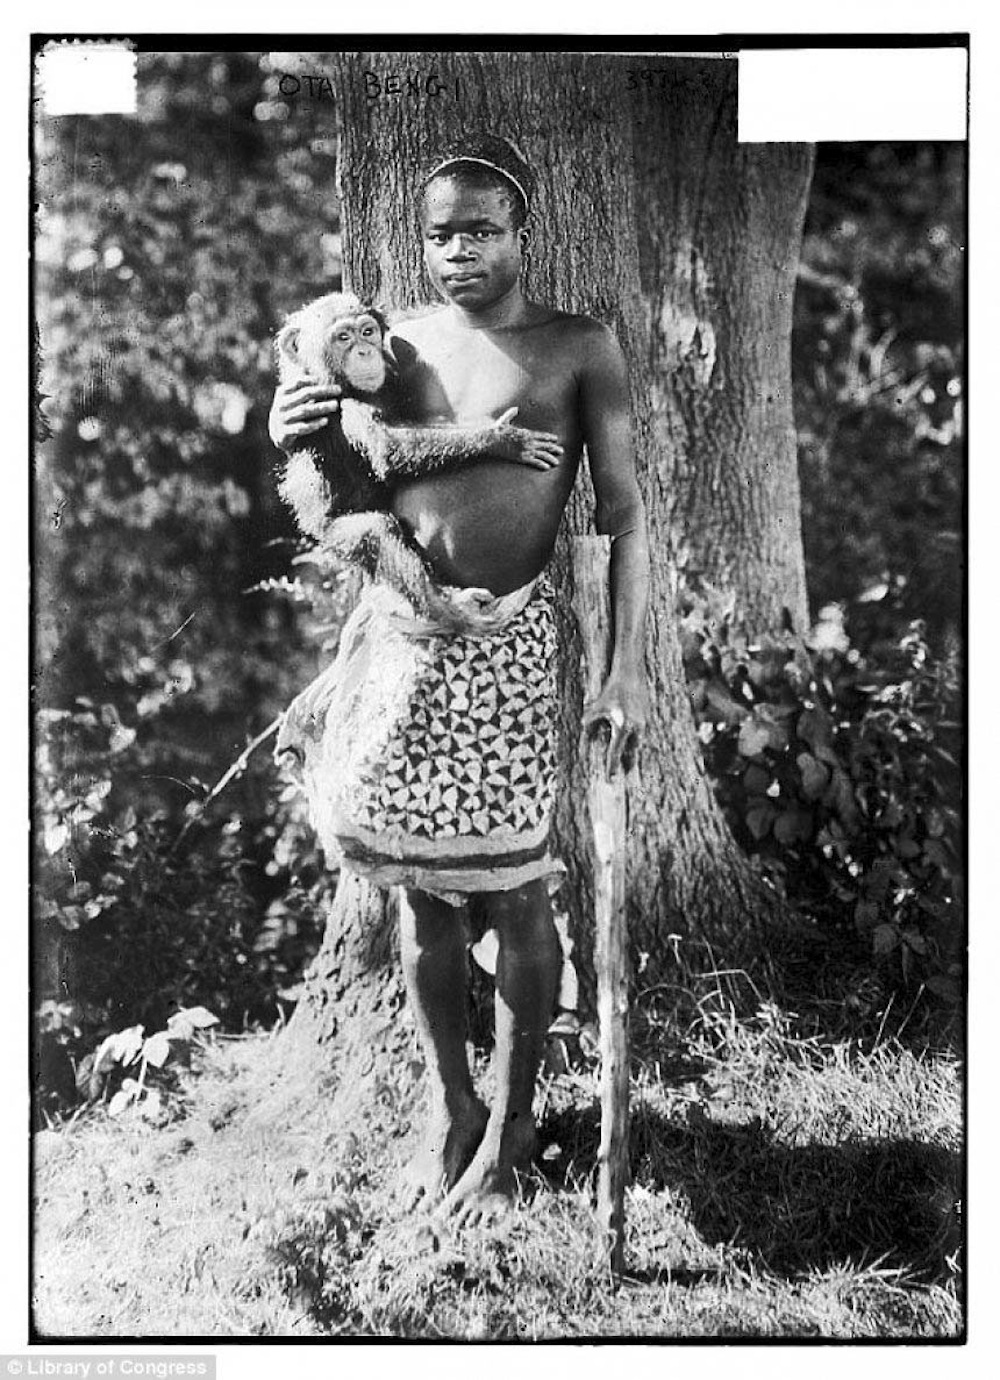 Ota Benga, a Mbuti pygmy from the Congo 1904